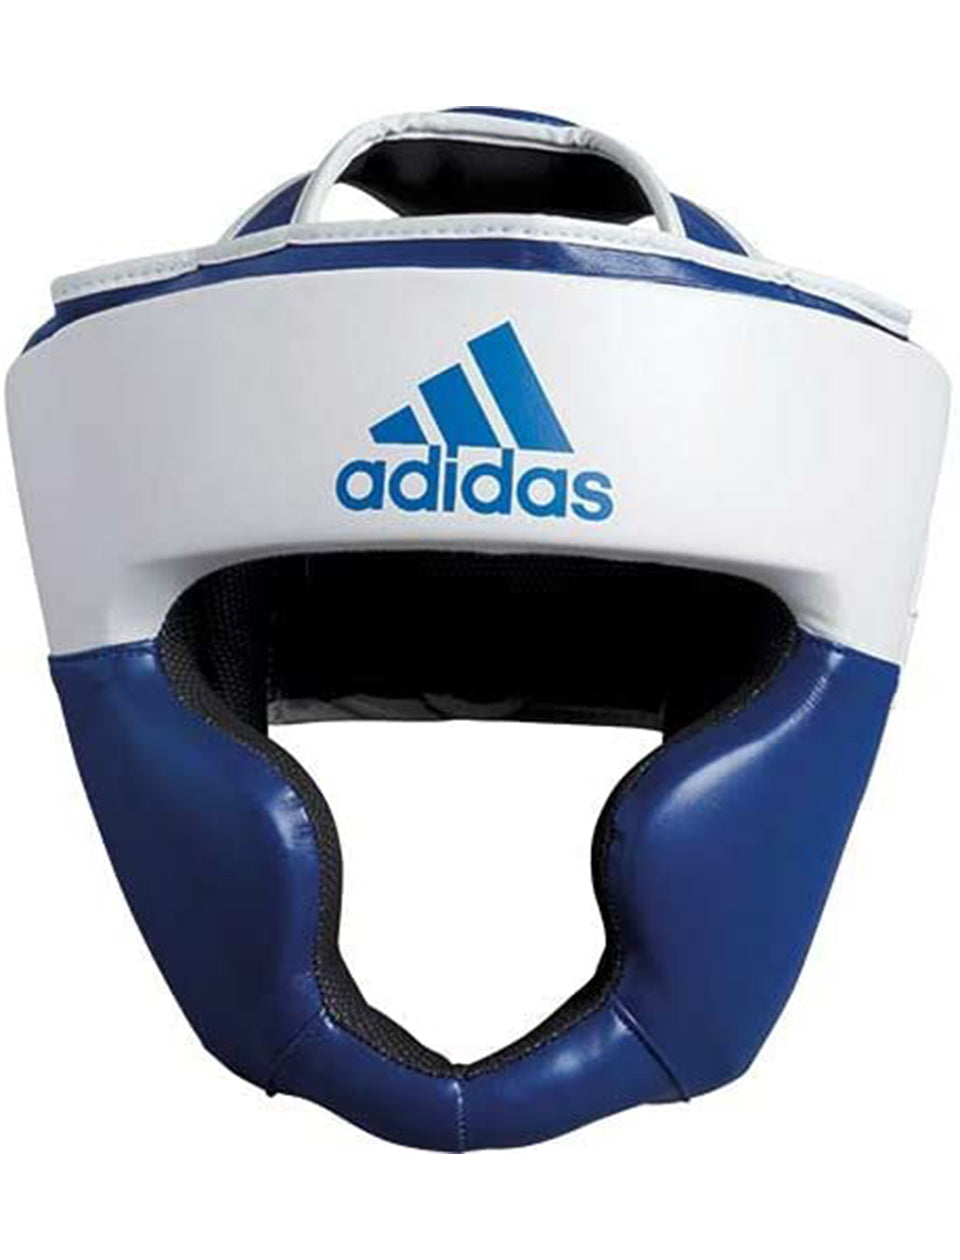 Adidas Response Standard Head Guard, Blue, XL ADIBHG024